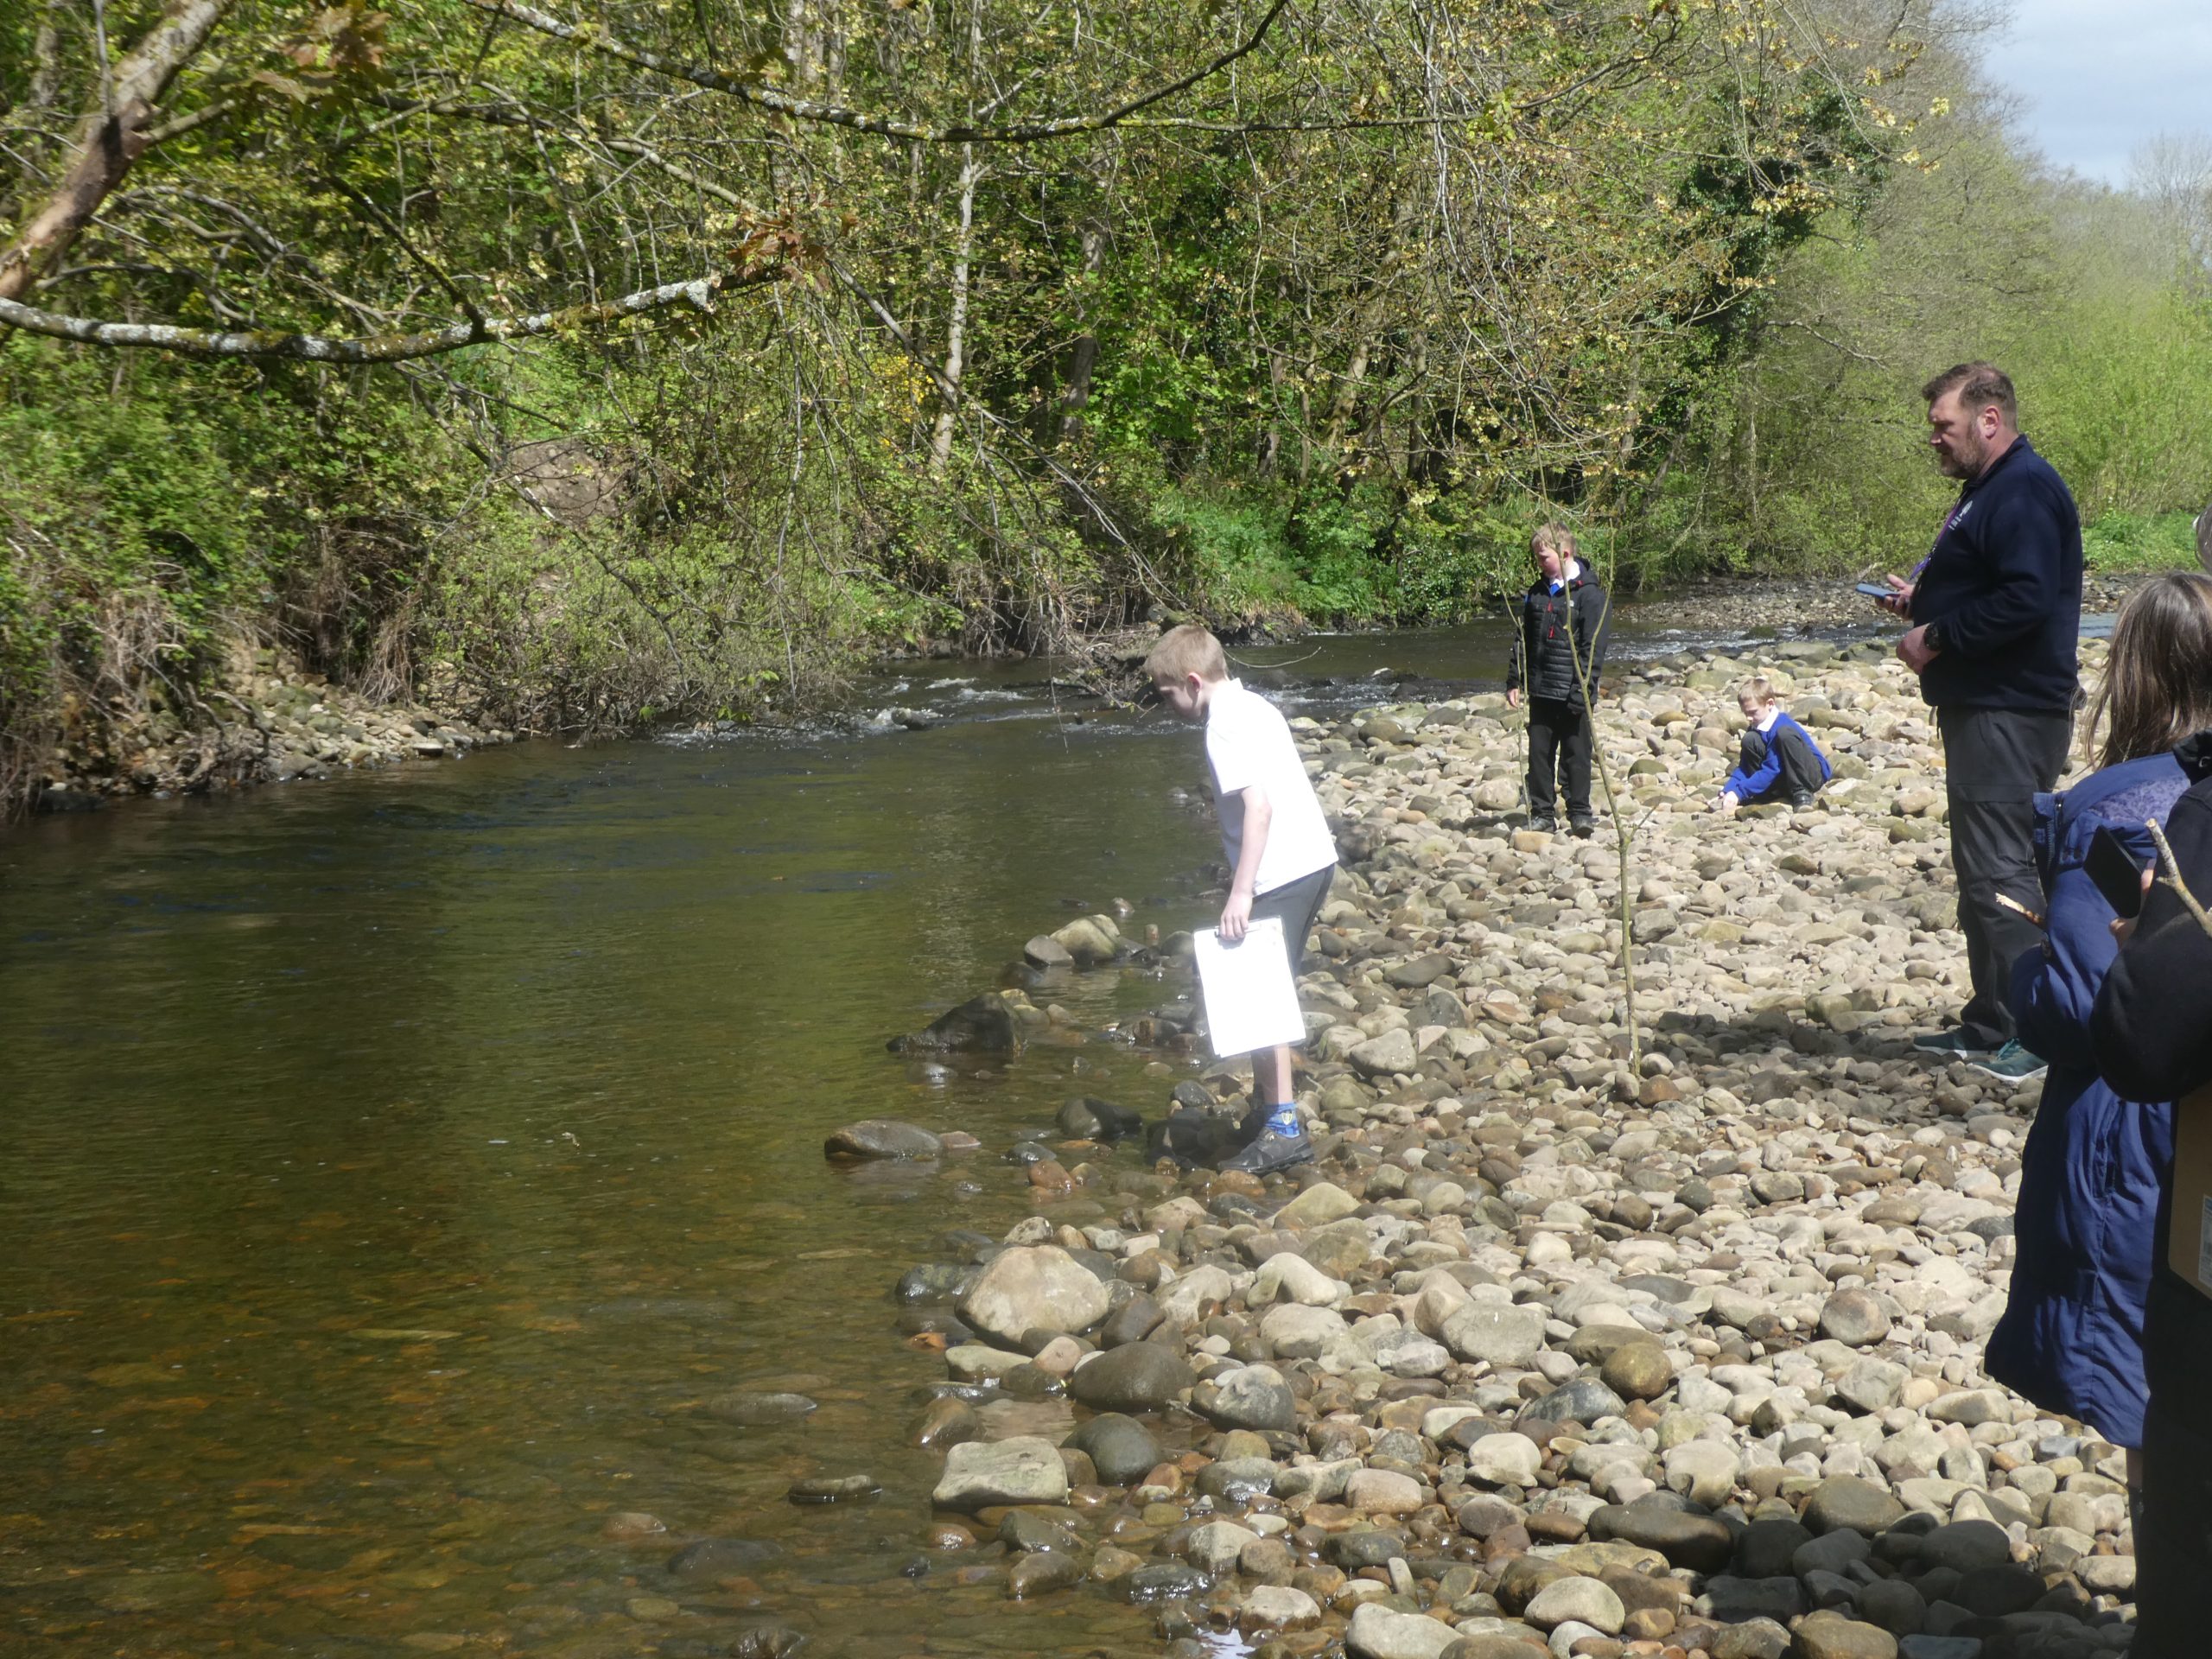 River studies at Scorton picnic site